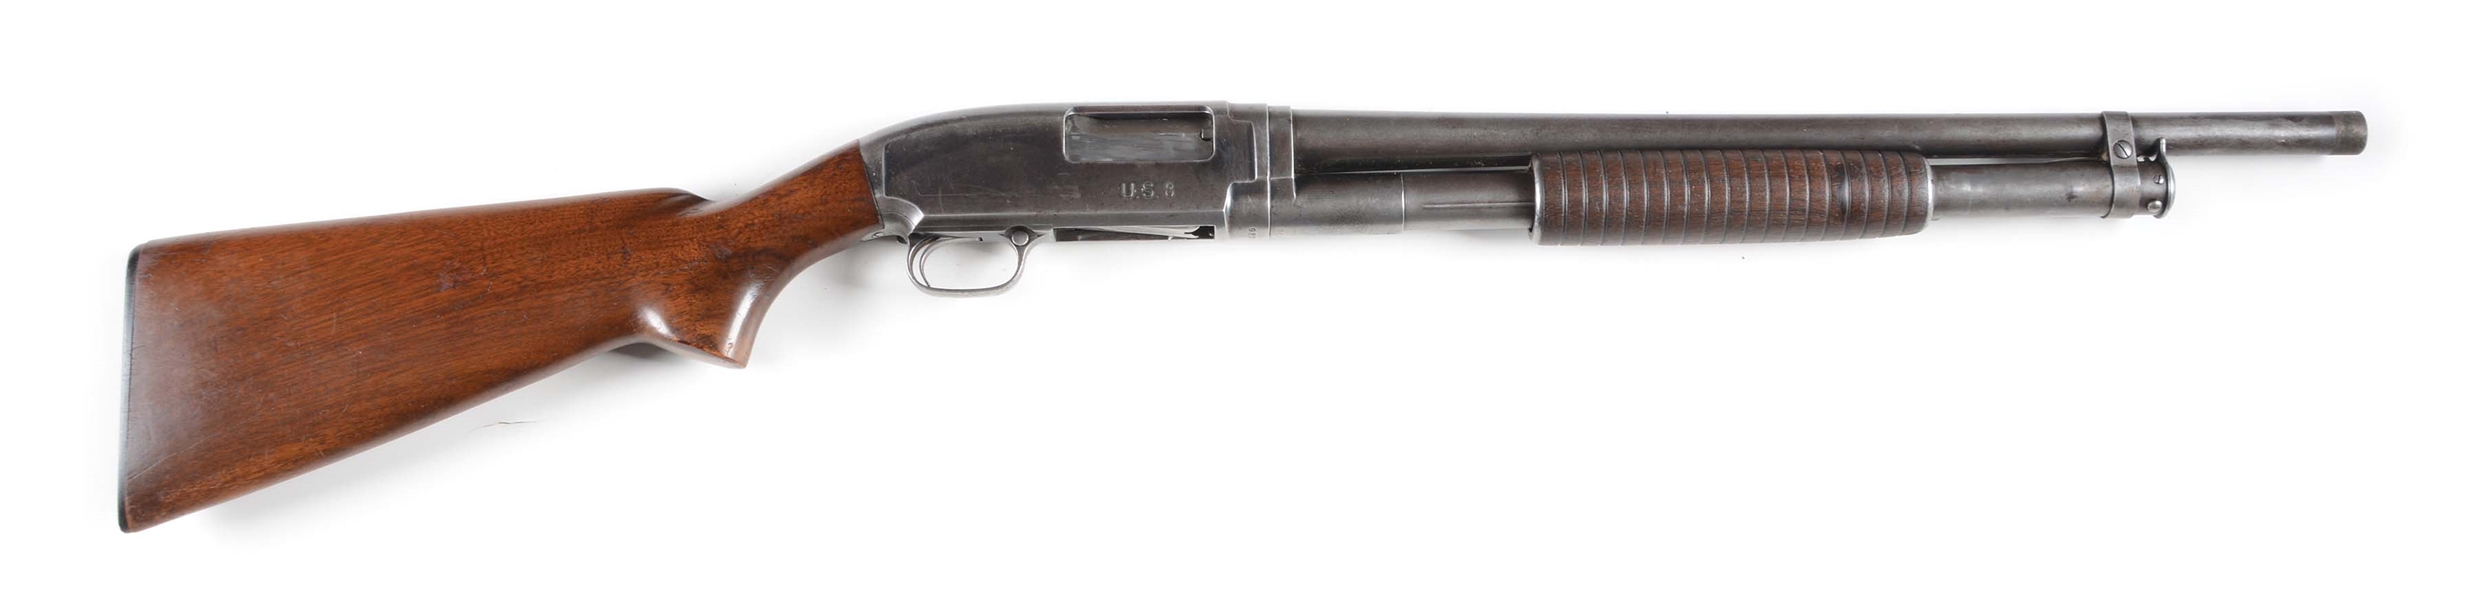 (C) US WINCHESTER MODEL 12 PUMP ACTION RIOT GUN (1945).